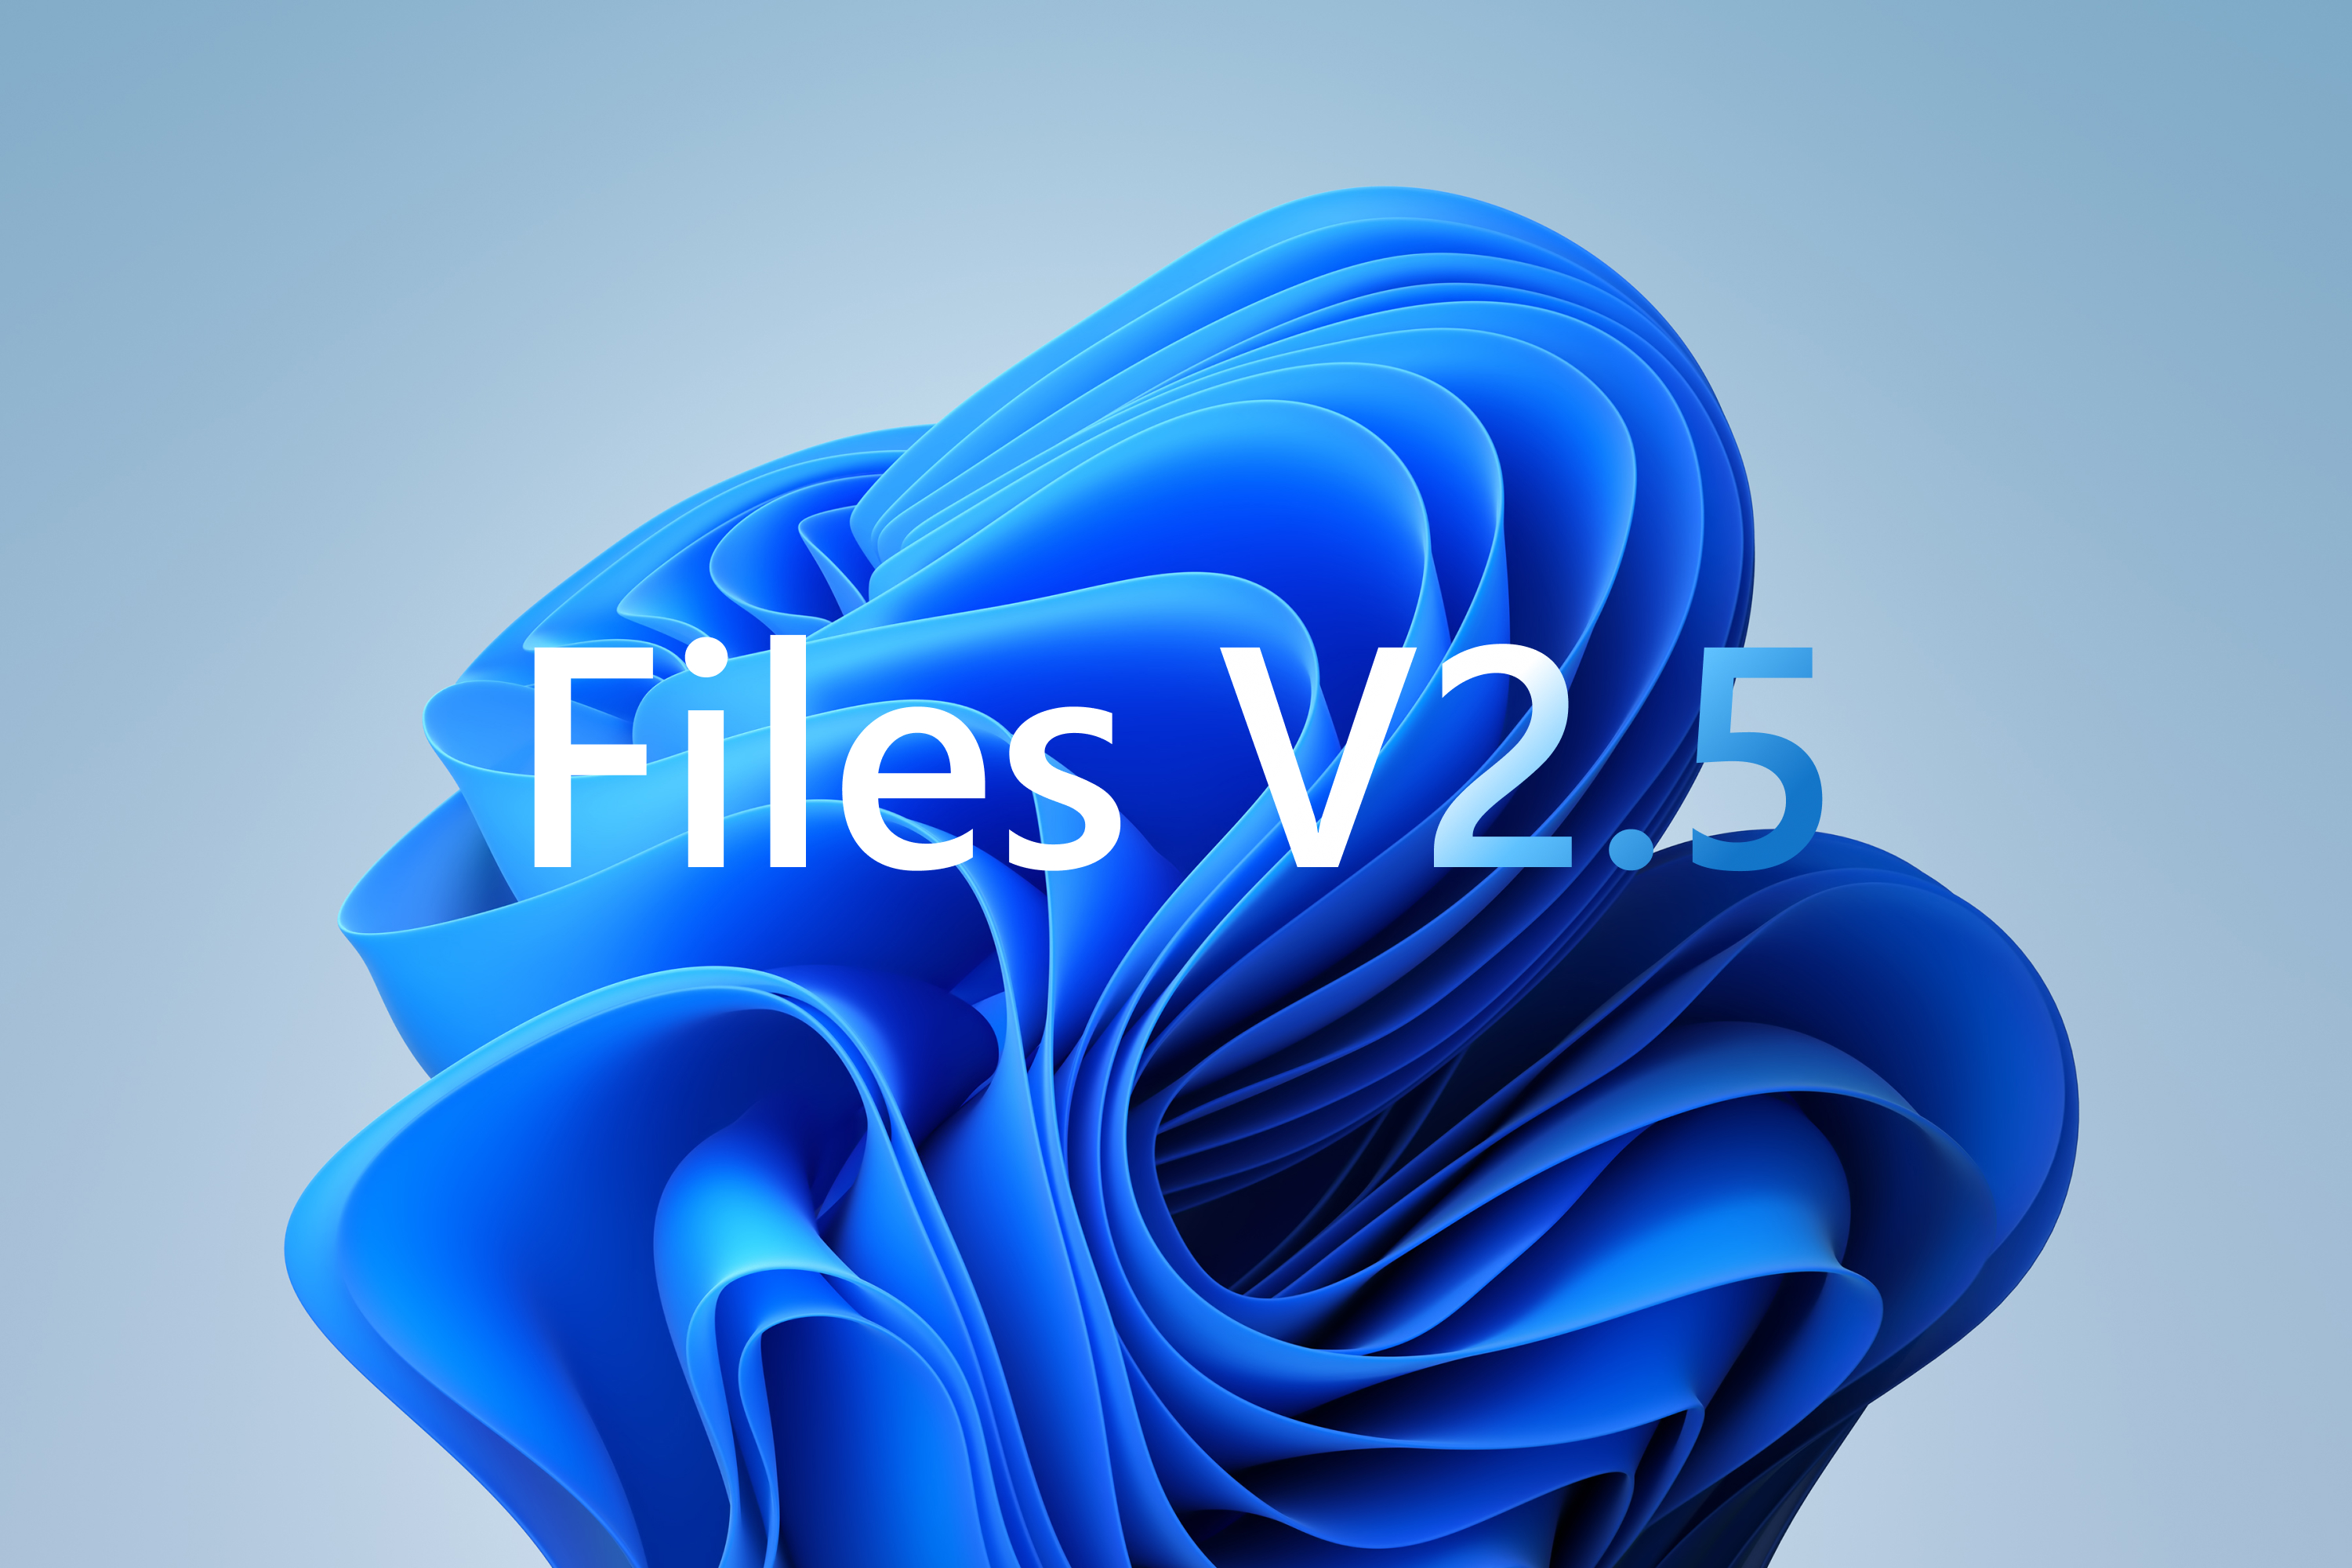 Announcing Files, version 2.5 thumbnail